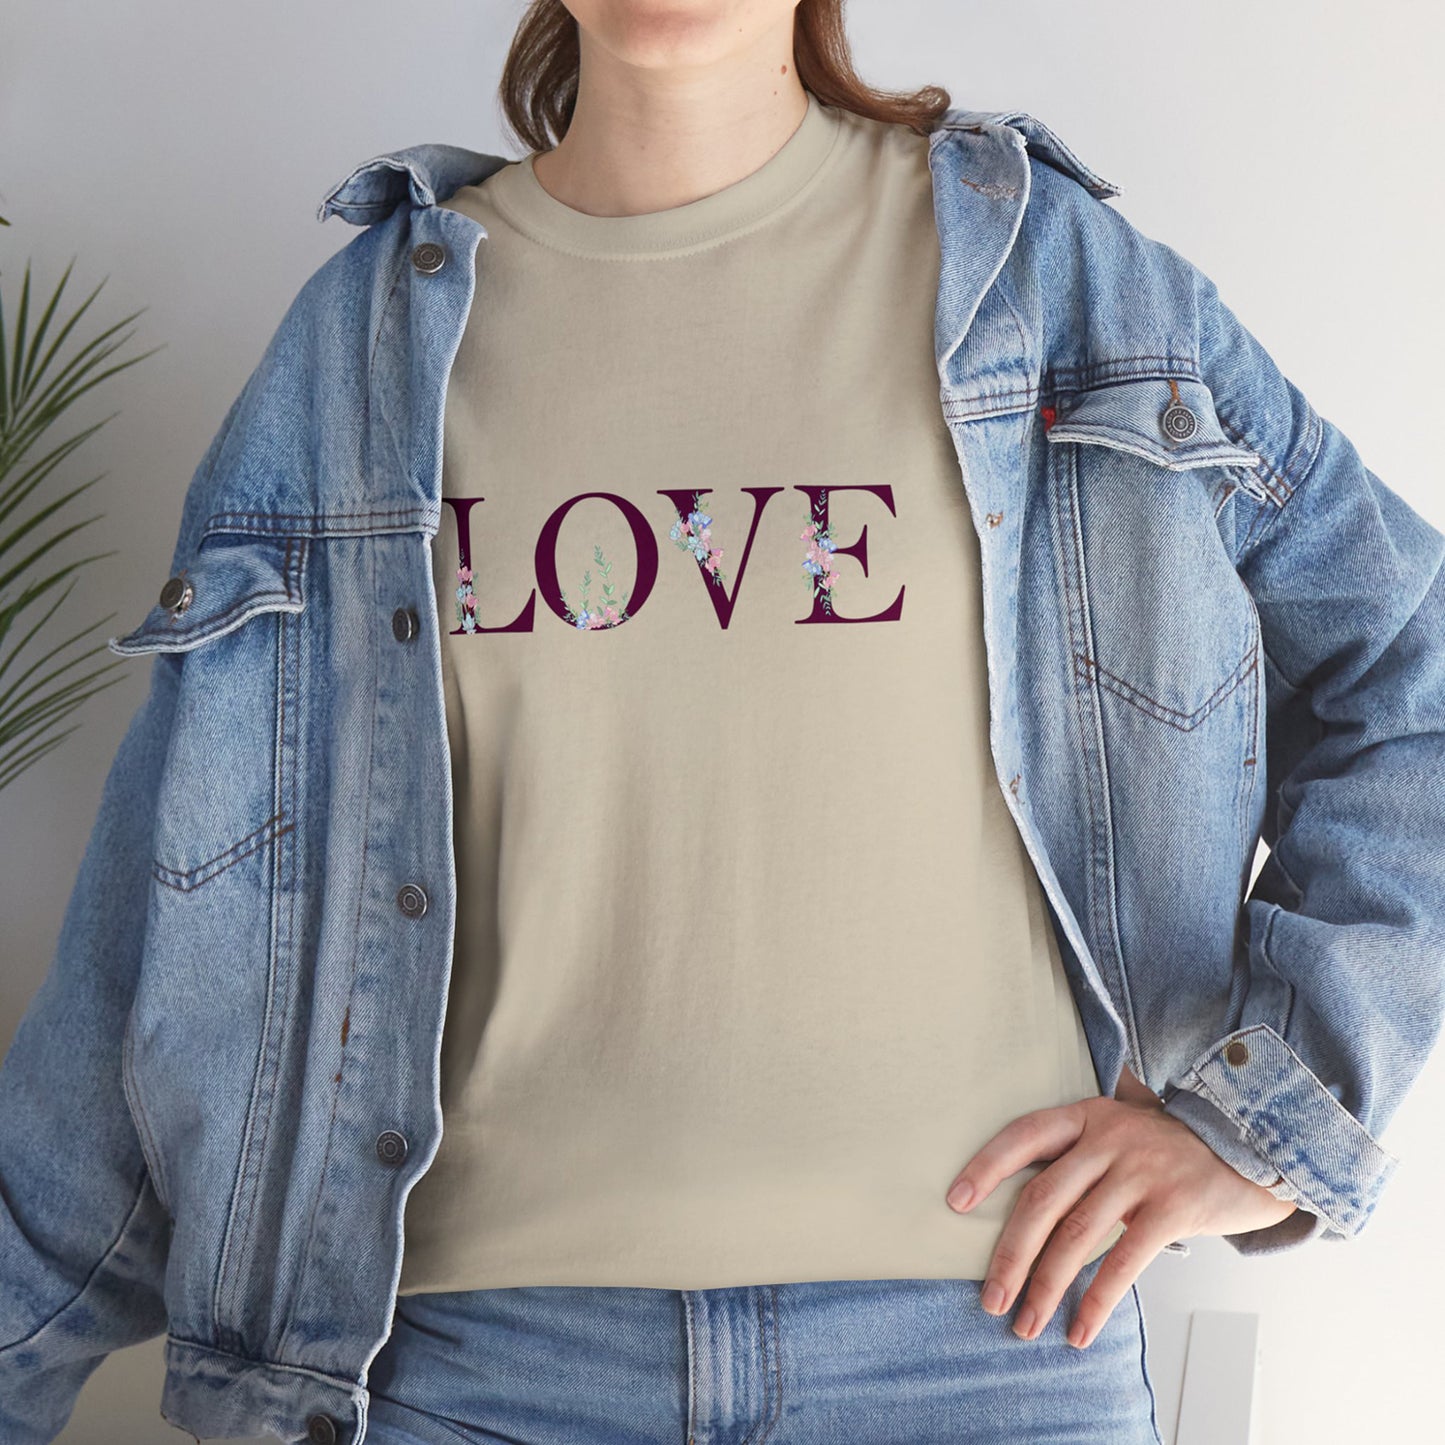 Casual Love Printed Women's T-shirt